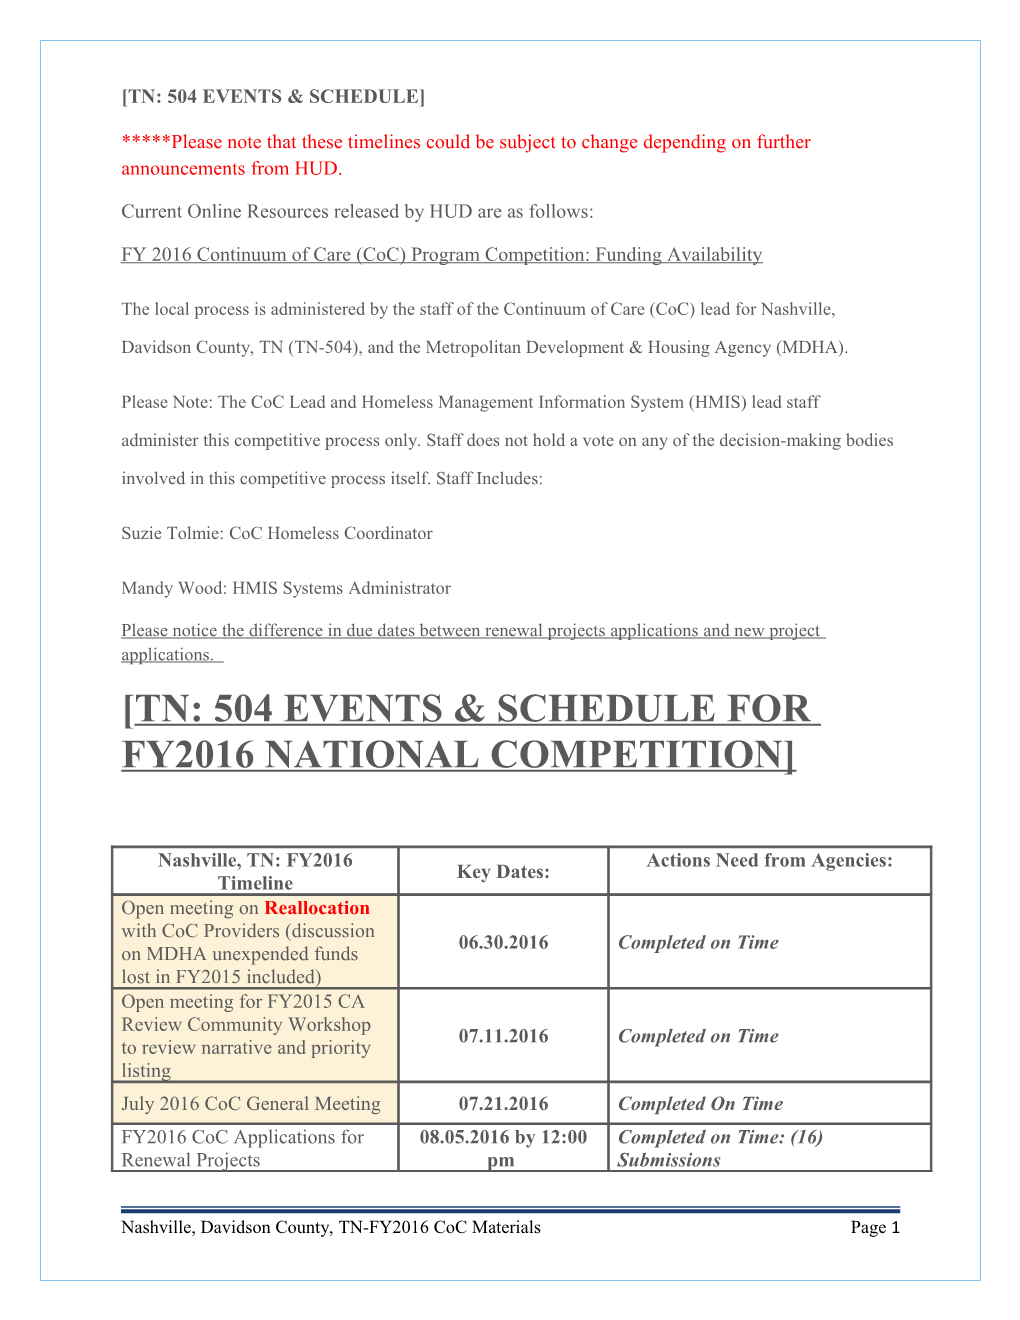 TN: 504 Events & Schedule